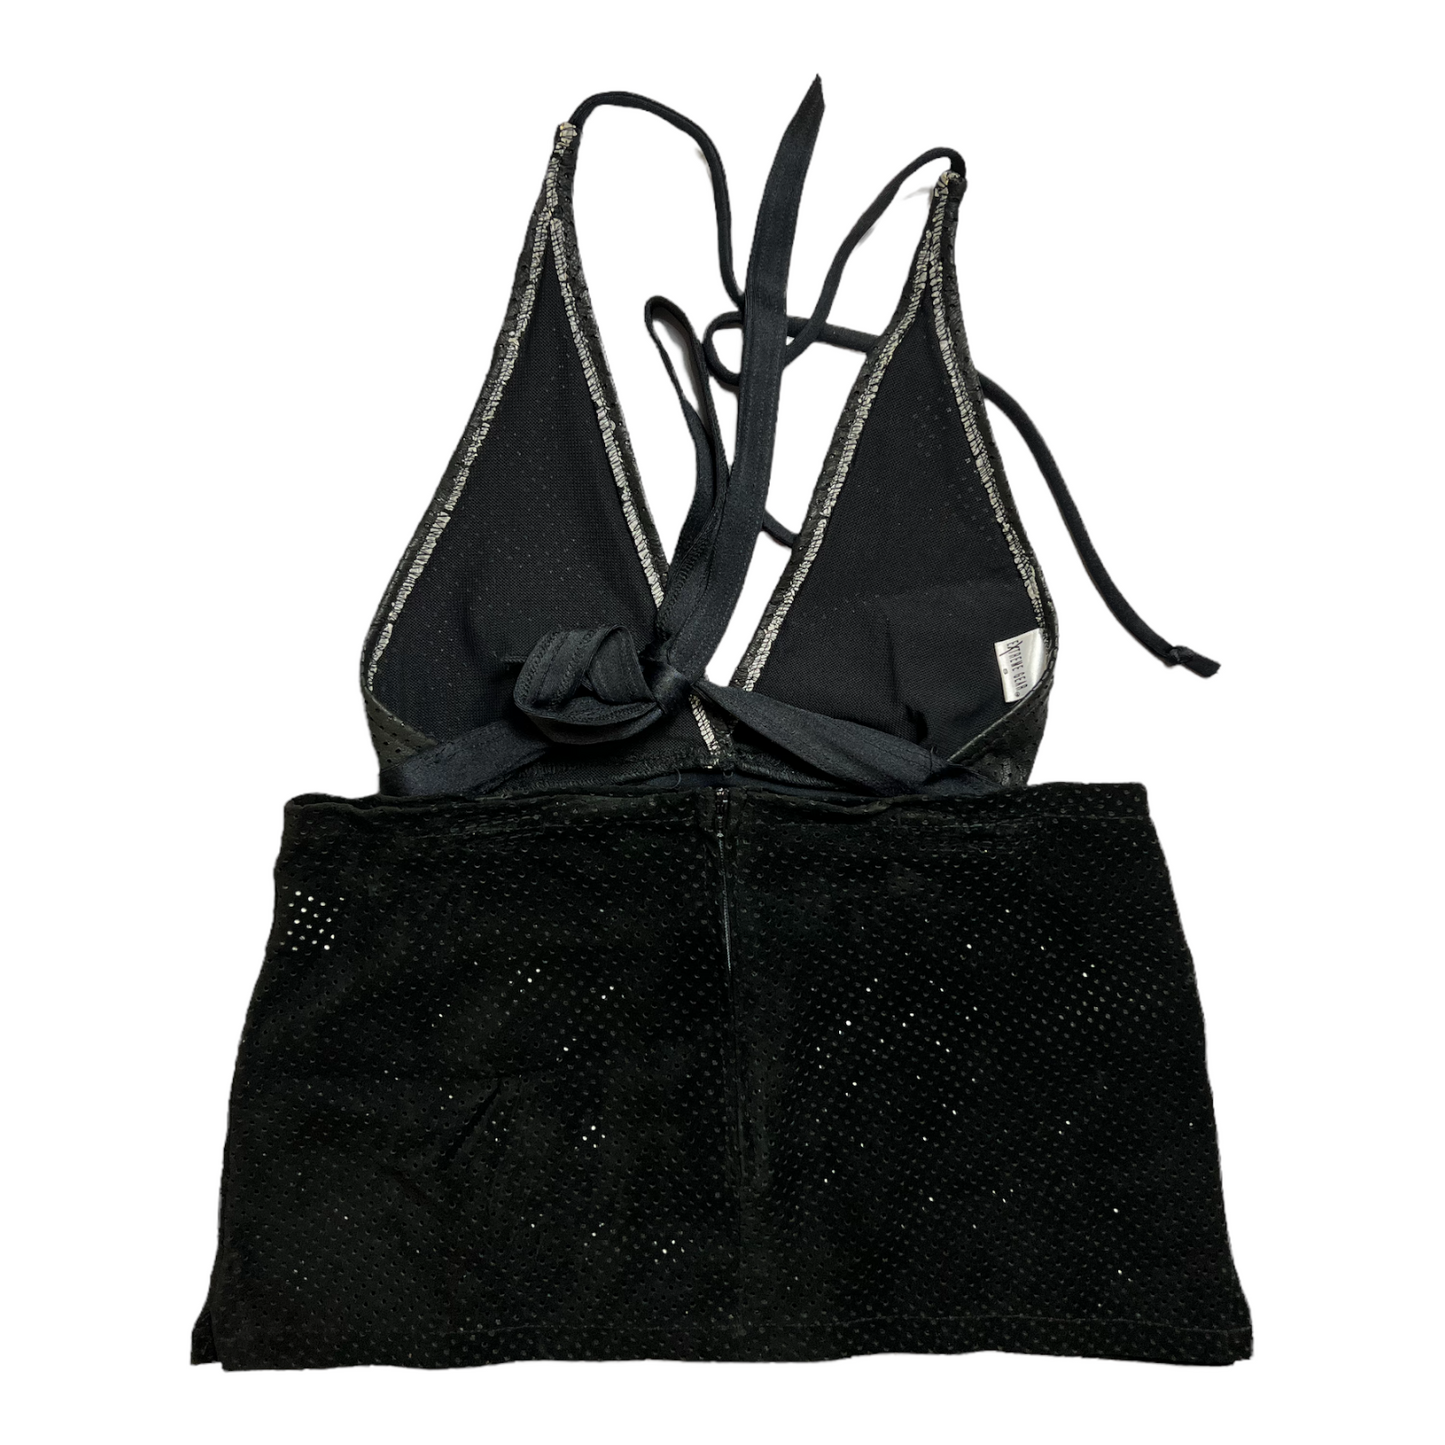 New Black Holey Skirt Set size S/M Adjustable Faux Suede (String Bikini Top SwimWear)